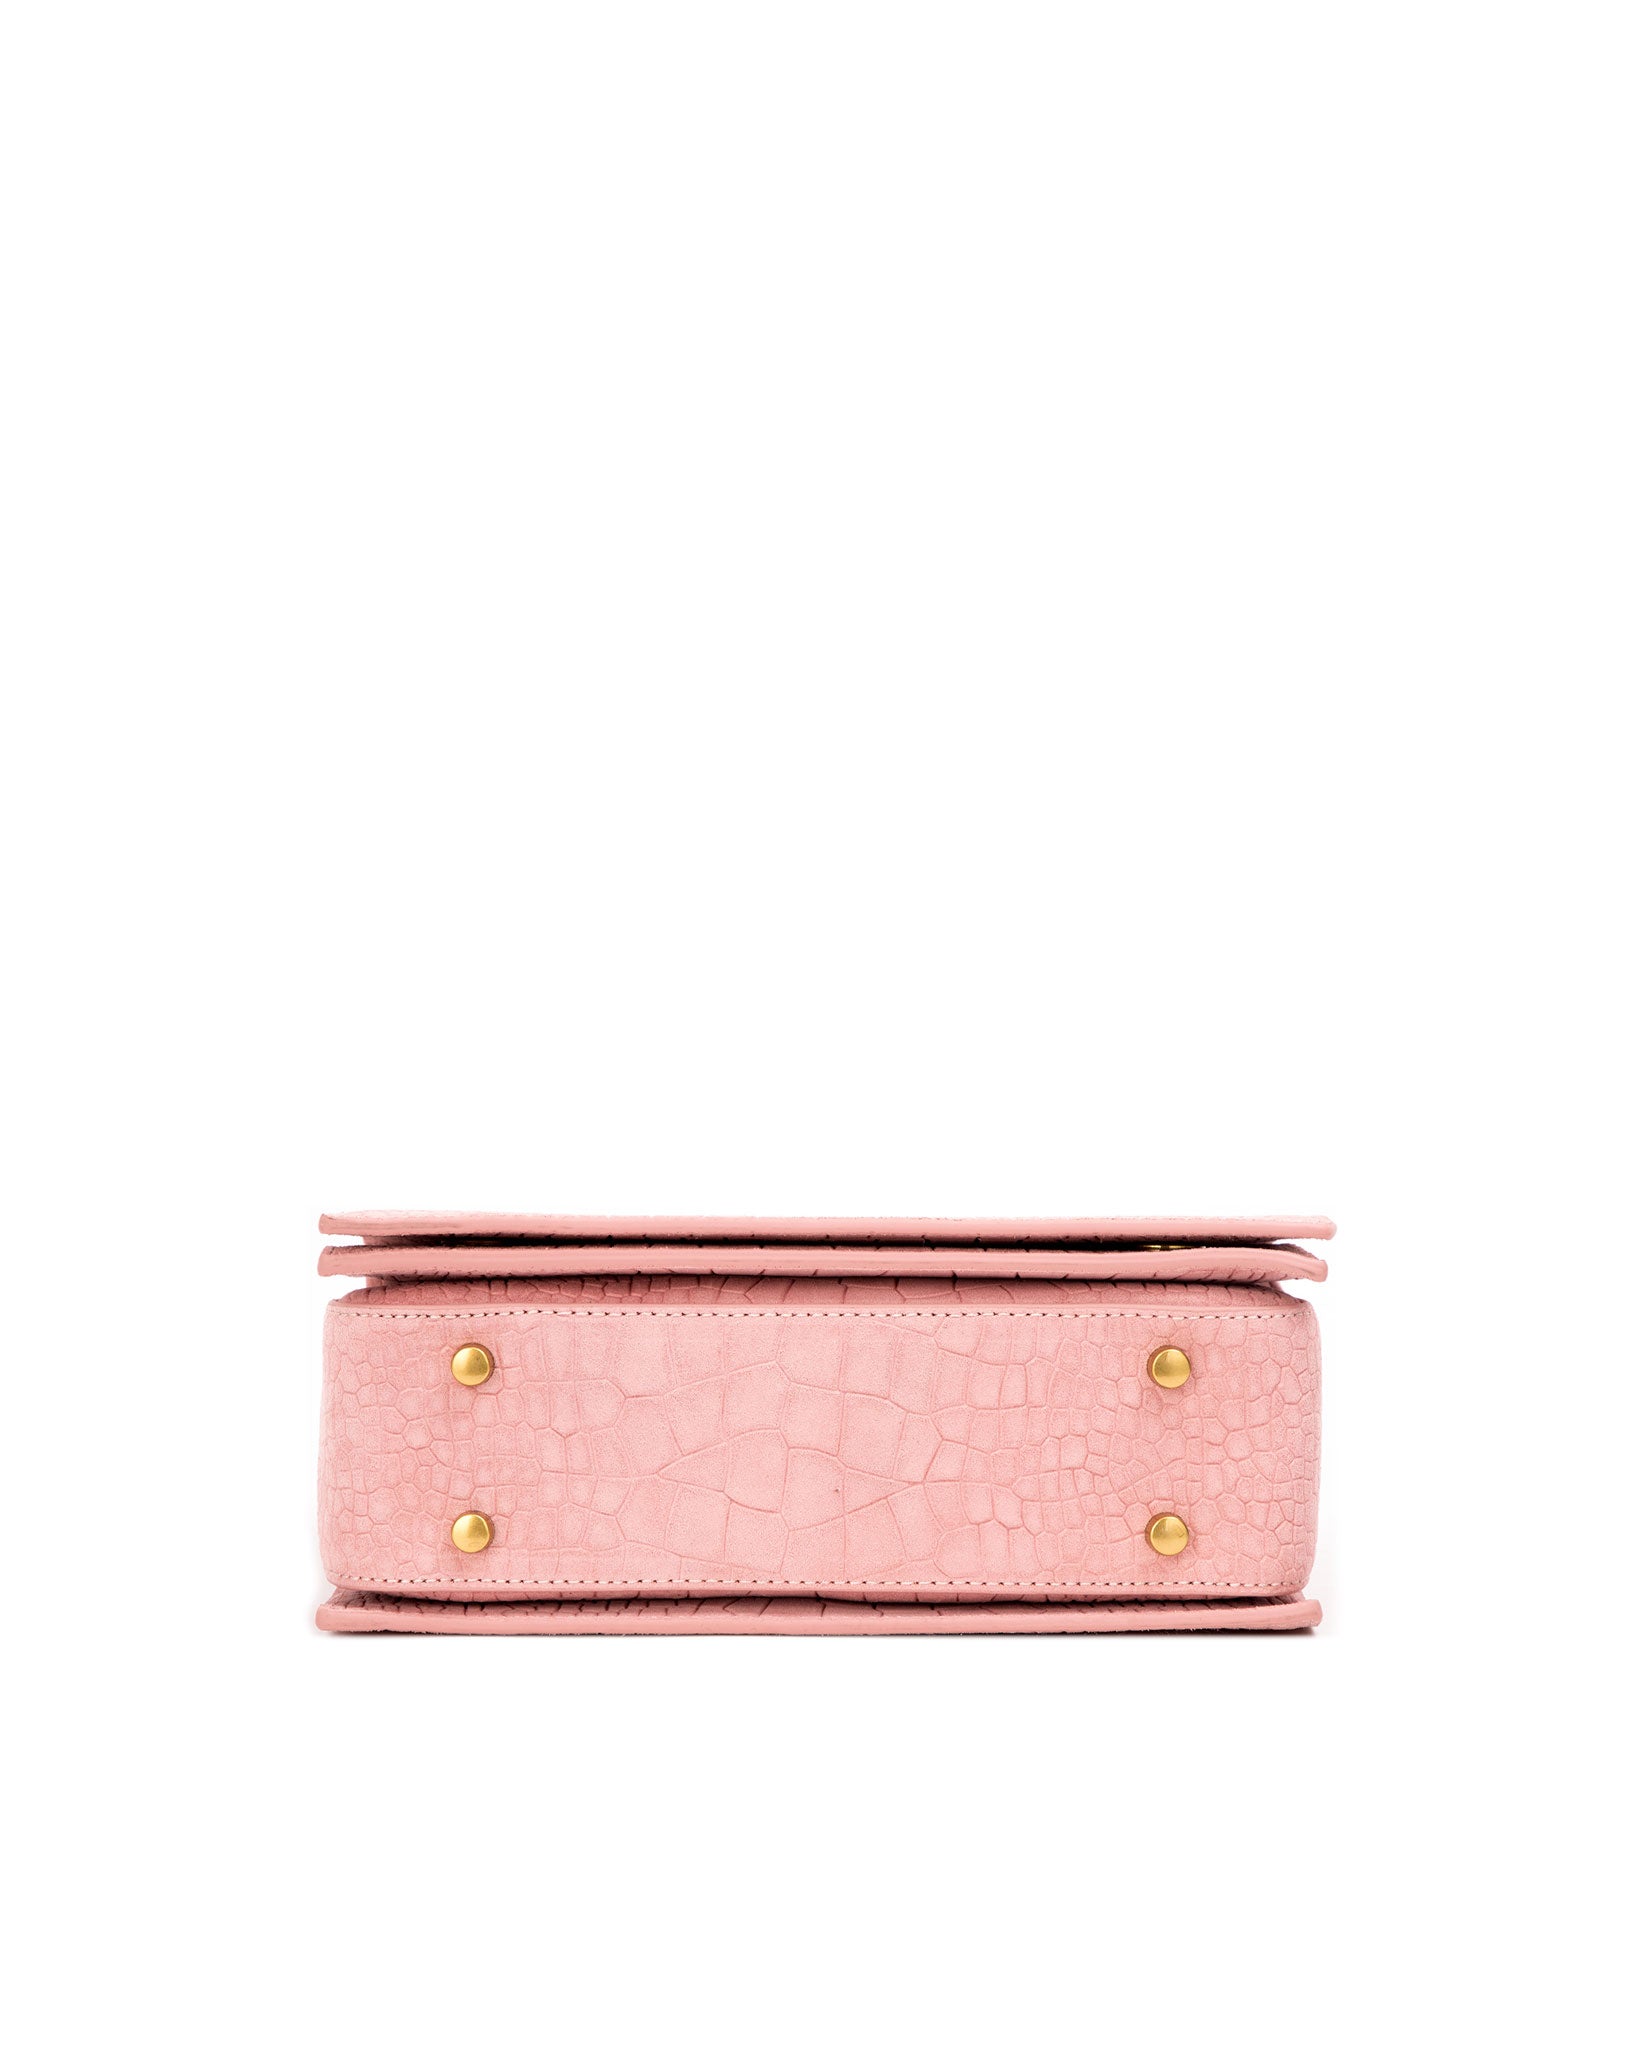 Brandon Blackwood New York - Standard Sophia Bag - Pink Croc Embossed w/ Gold Hardware